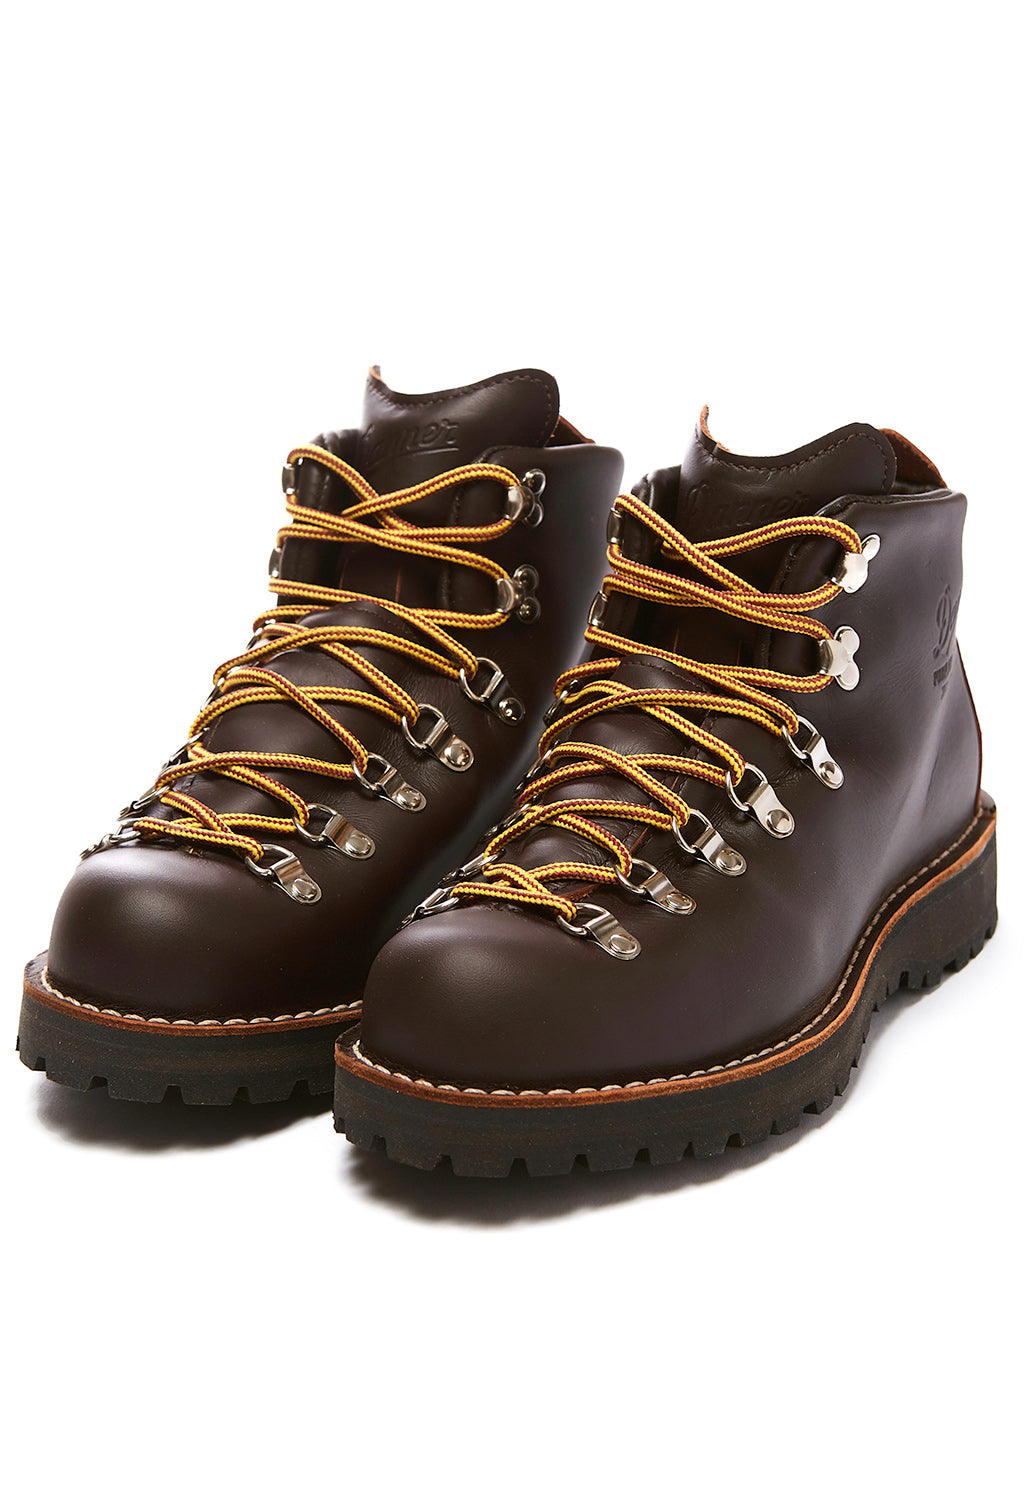 Danner Mountain Light Men's Boots - Brown